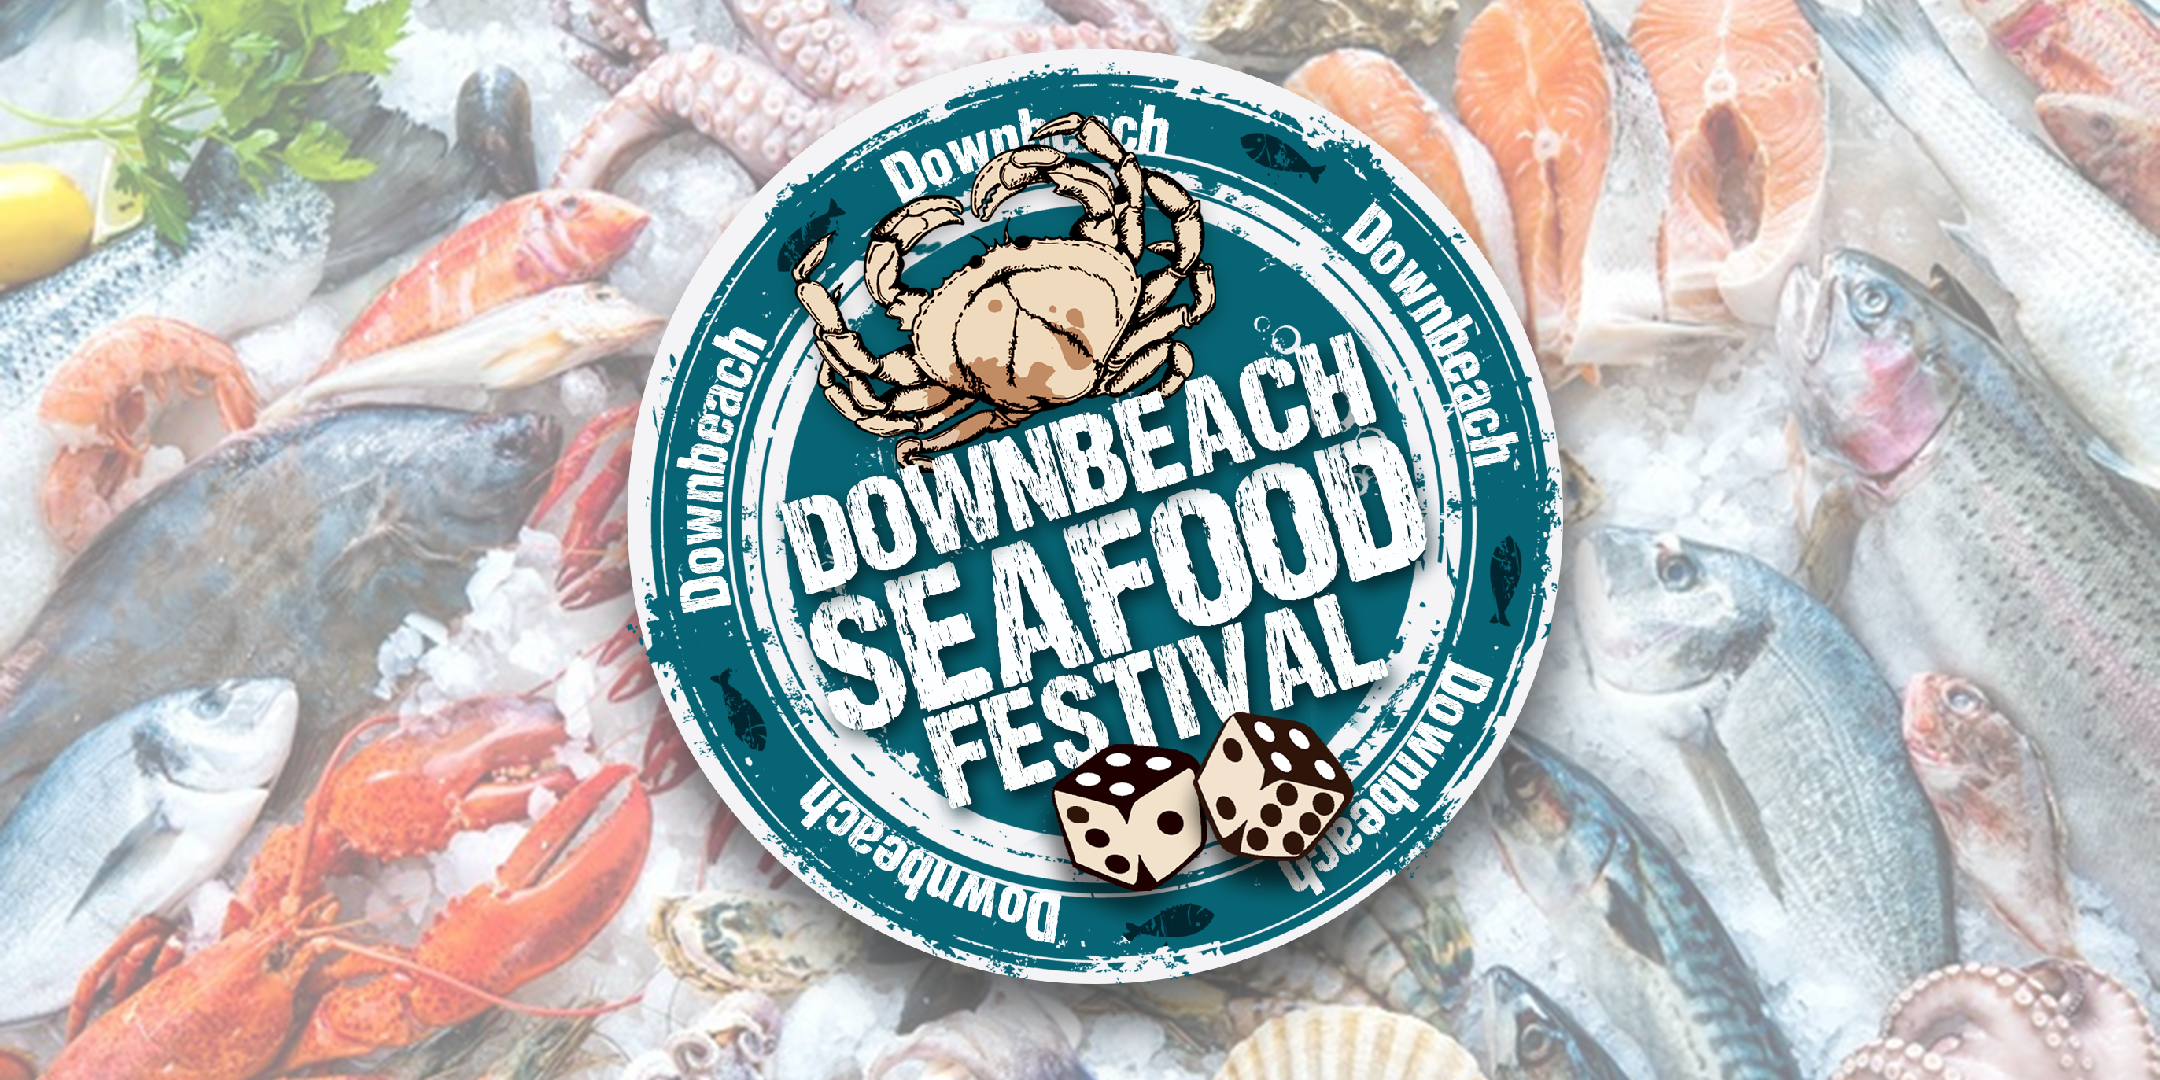 Atlantic City Seafood Festival